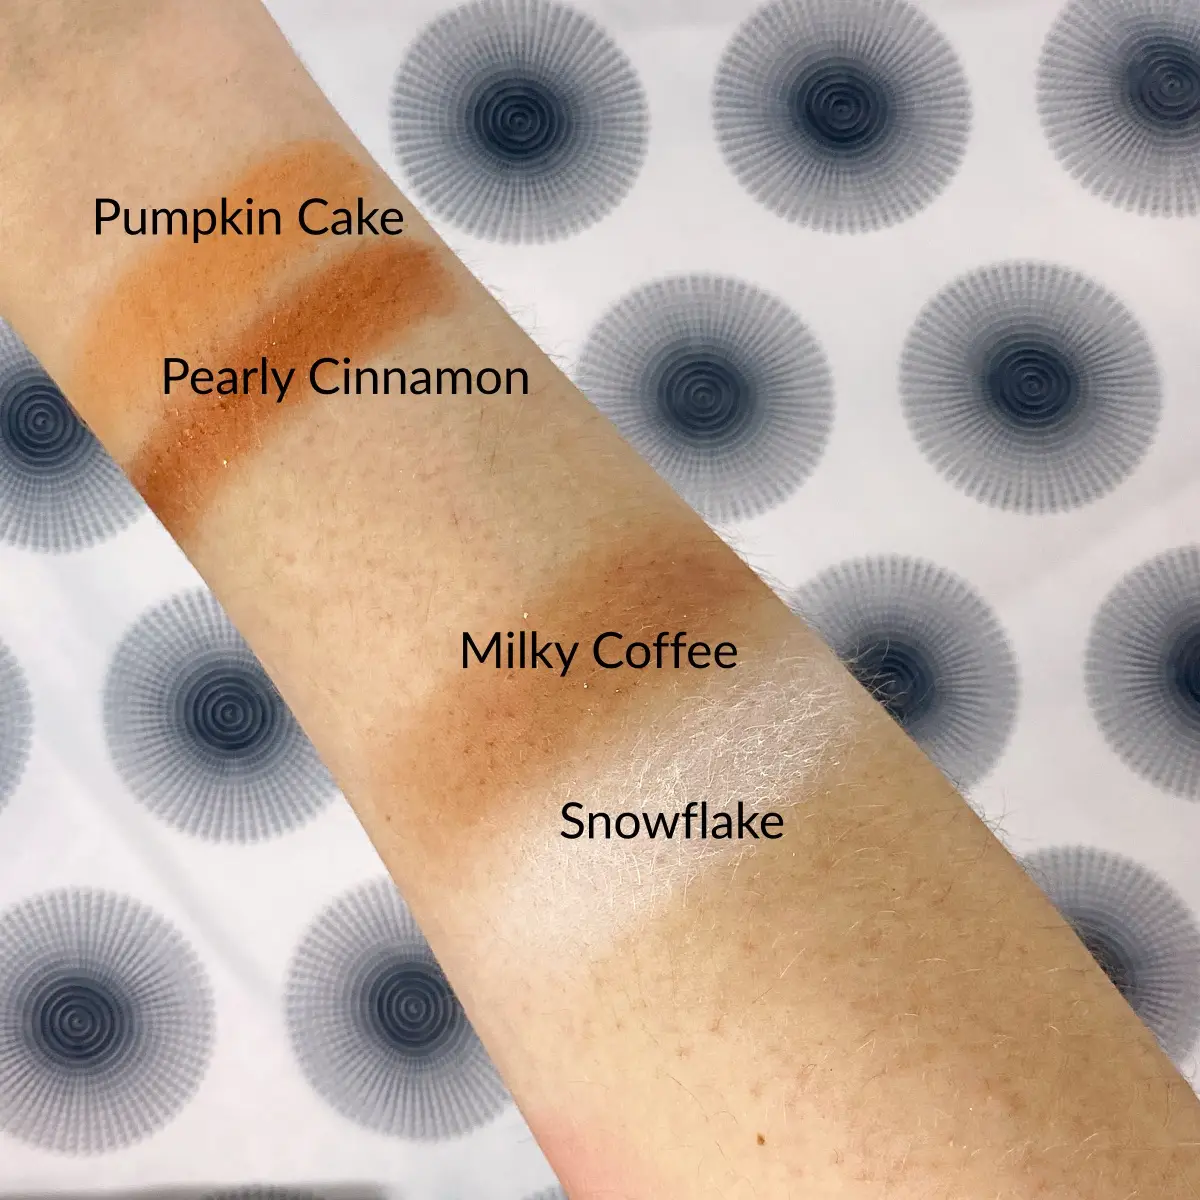 alix avien duo eyeshadow pumpkin cake pearly cinnamon and mono eyeshadow snowflake milky coffee swatches